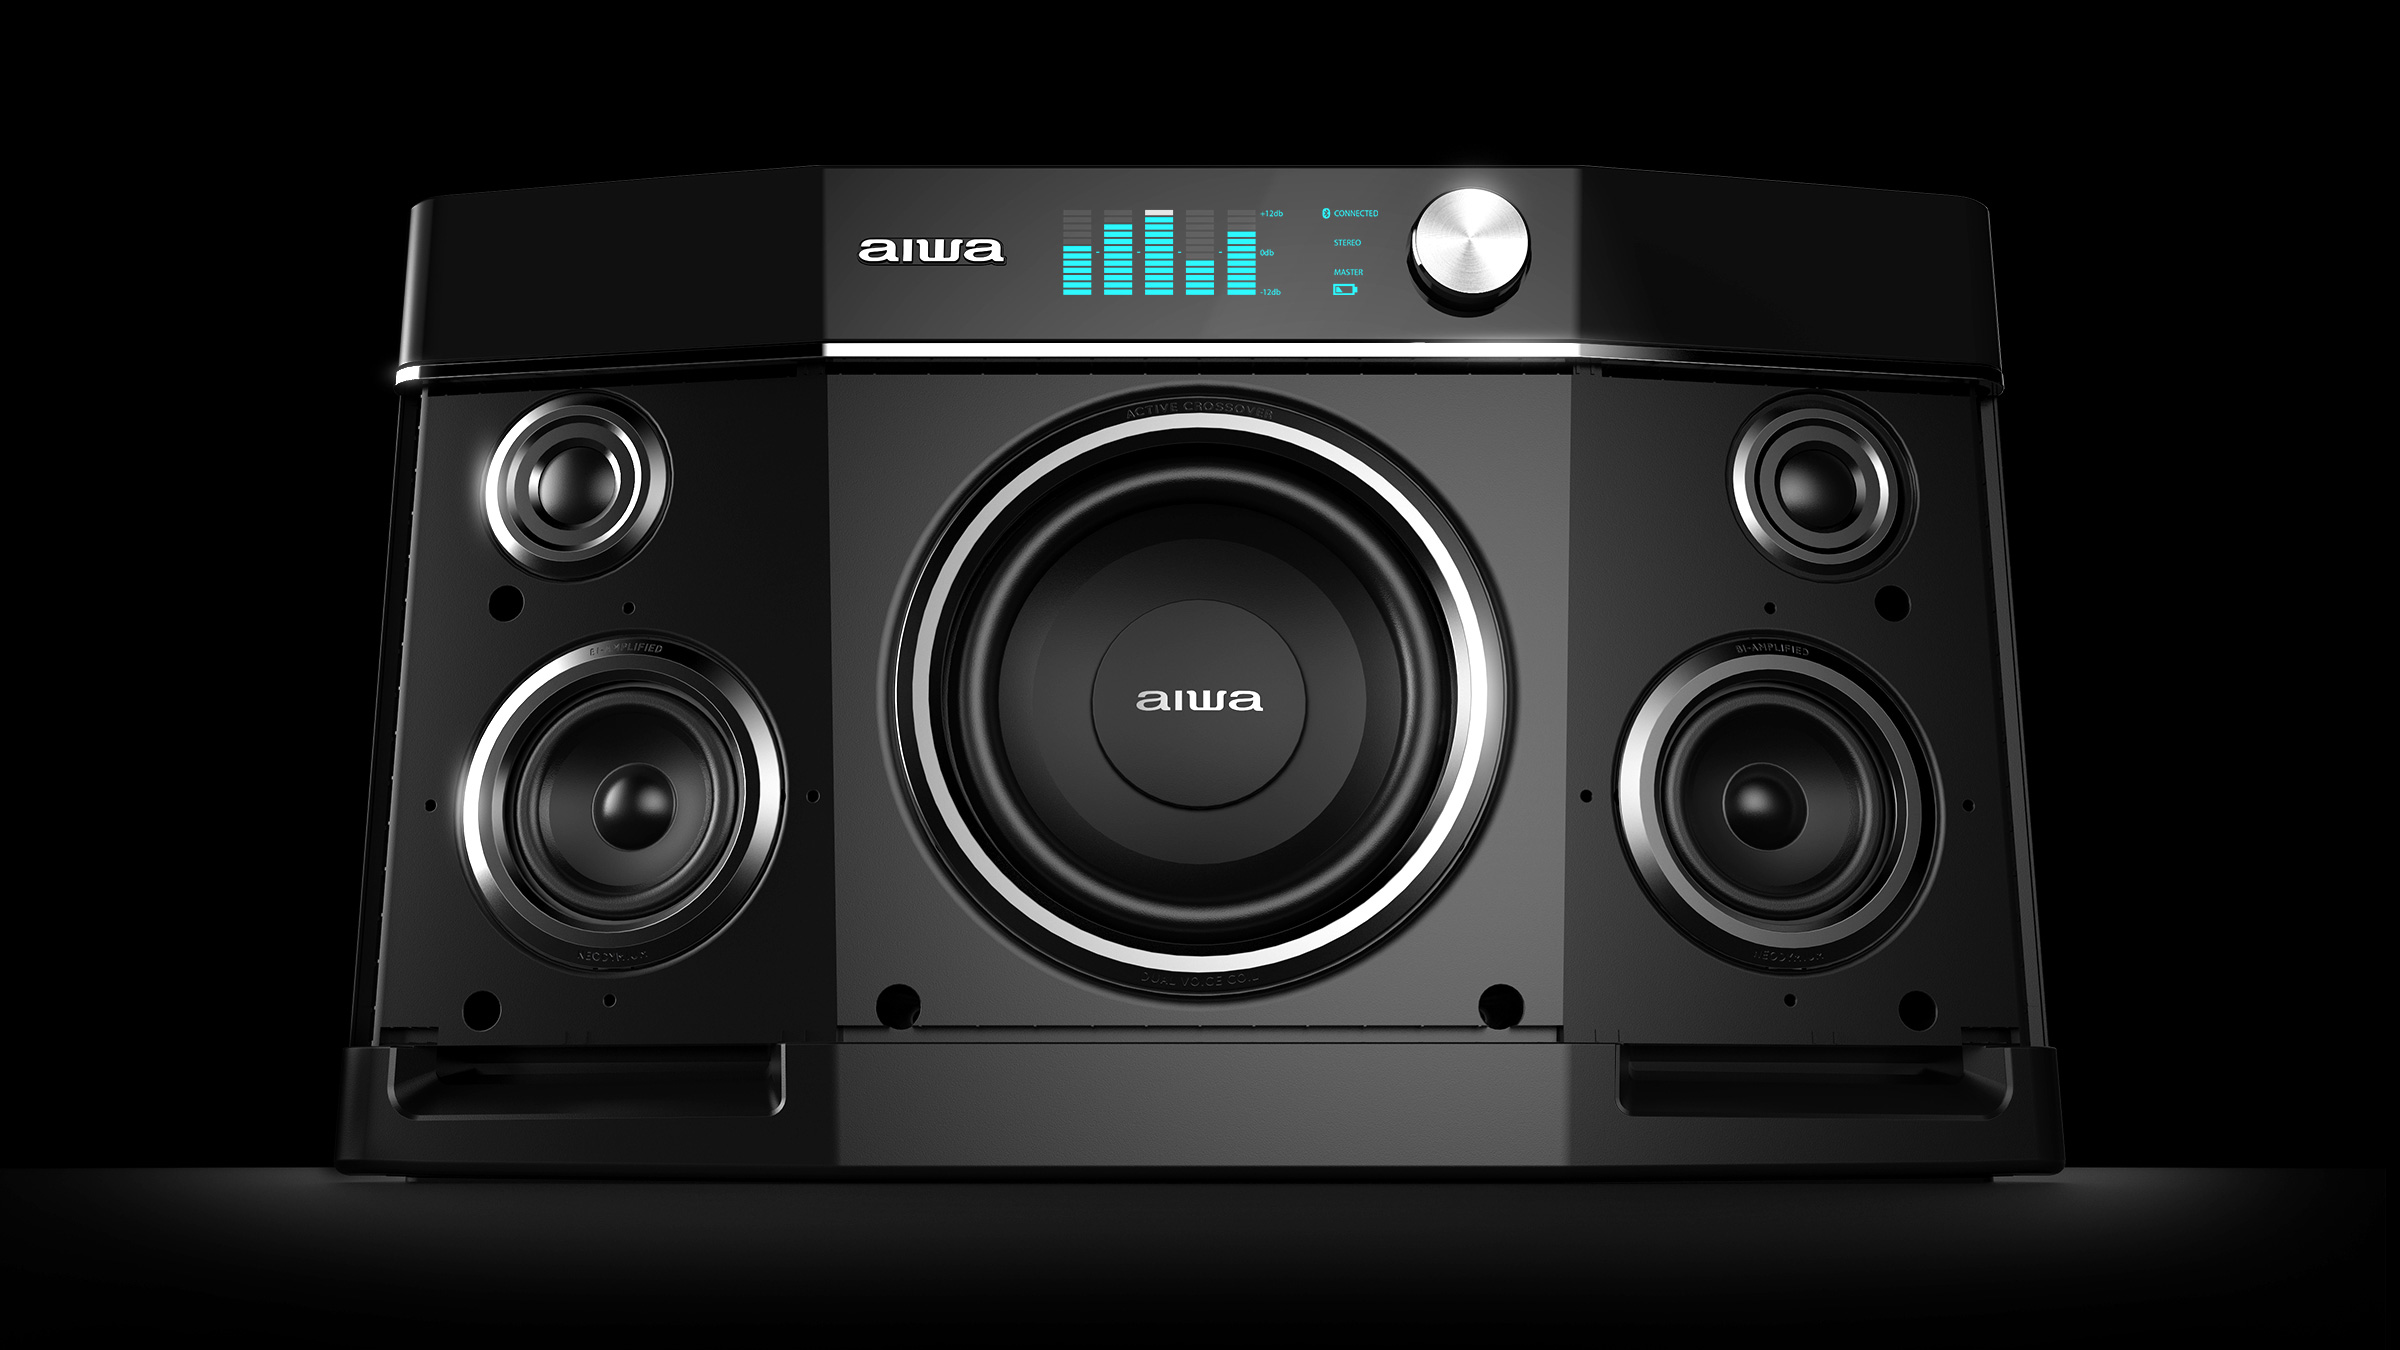 aiwa bluetooth speaker industrial design 19